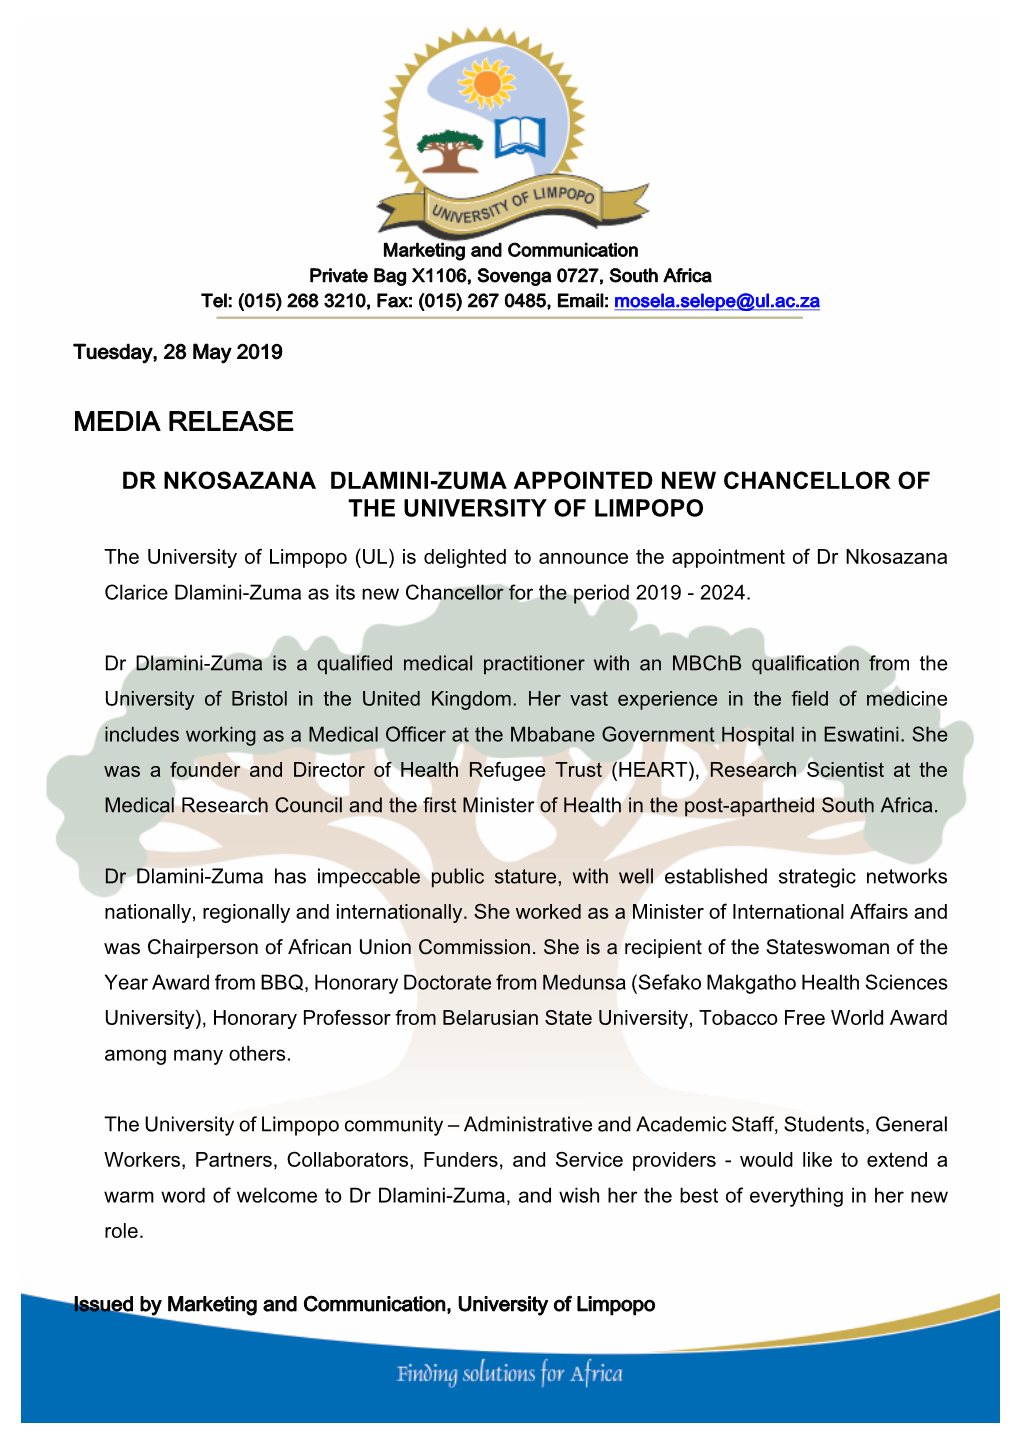 Dr Nkosazana Dlamini-Zuma Appointed New Chancellor of the University of Limpopo